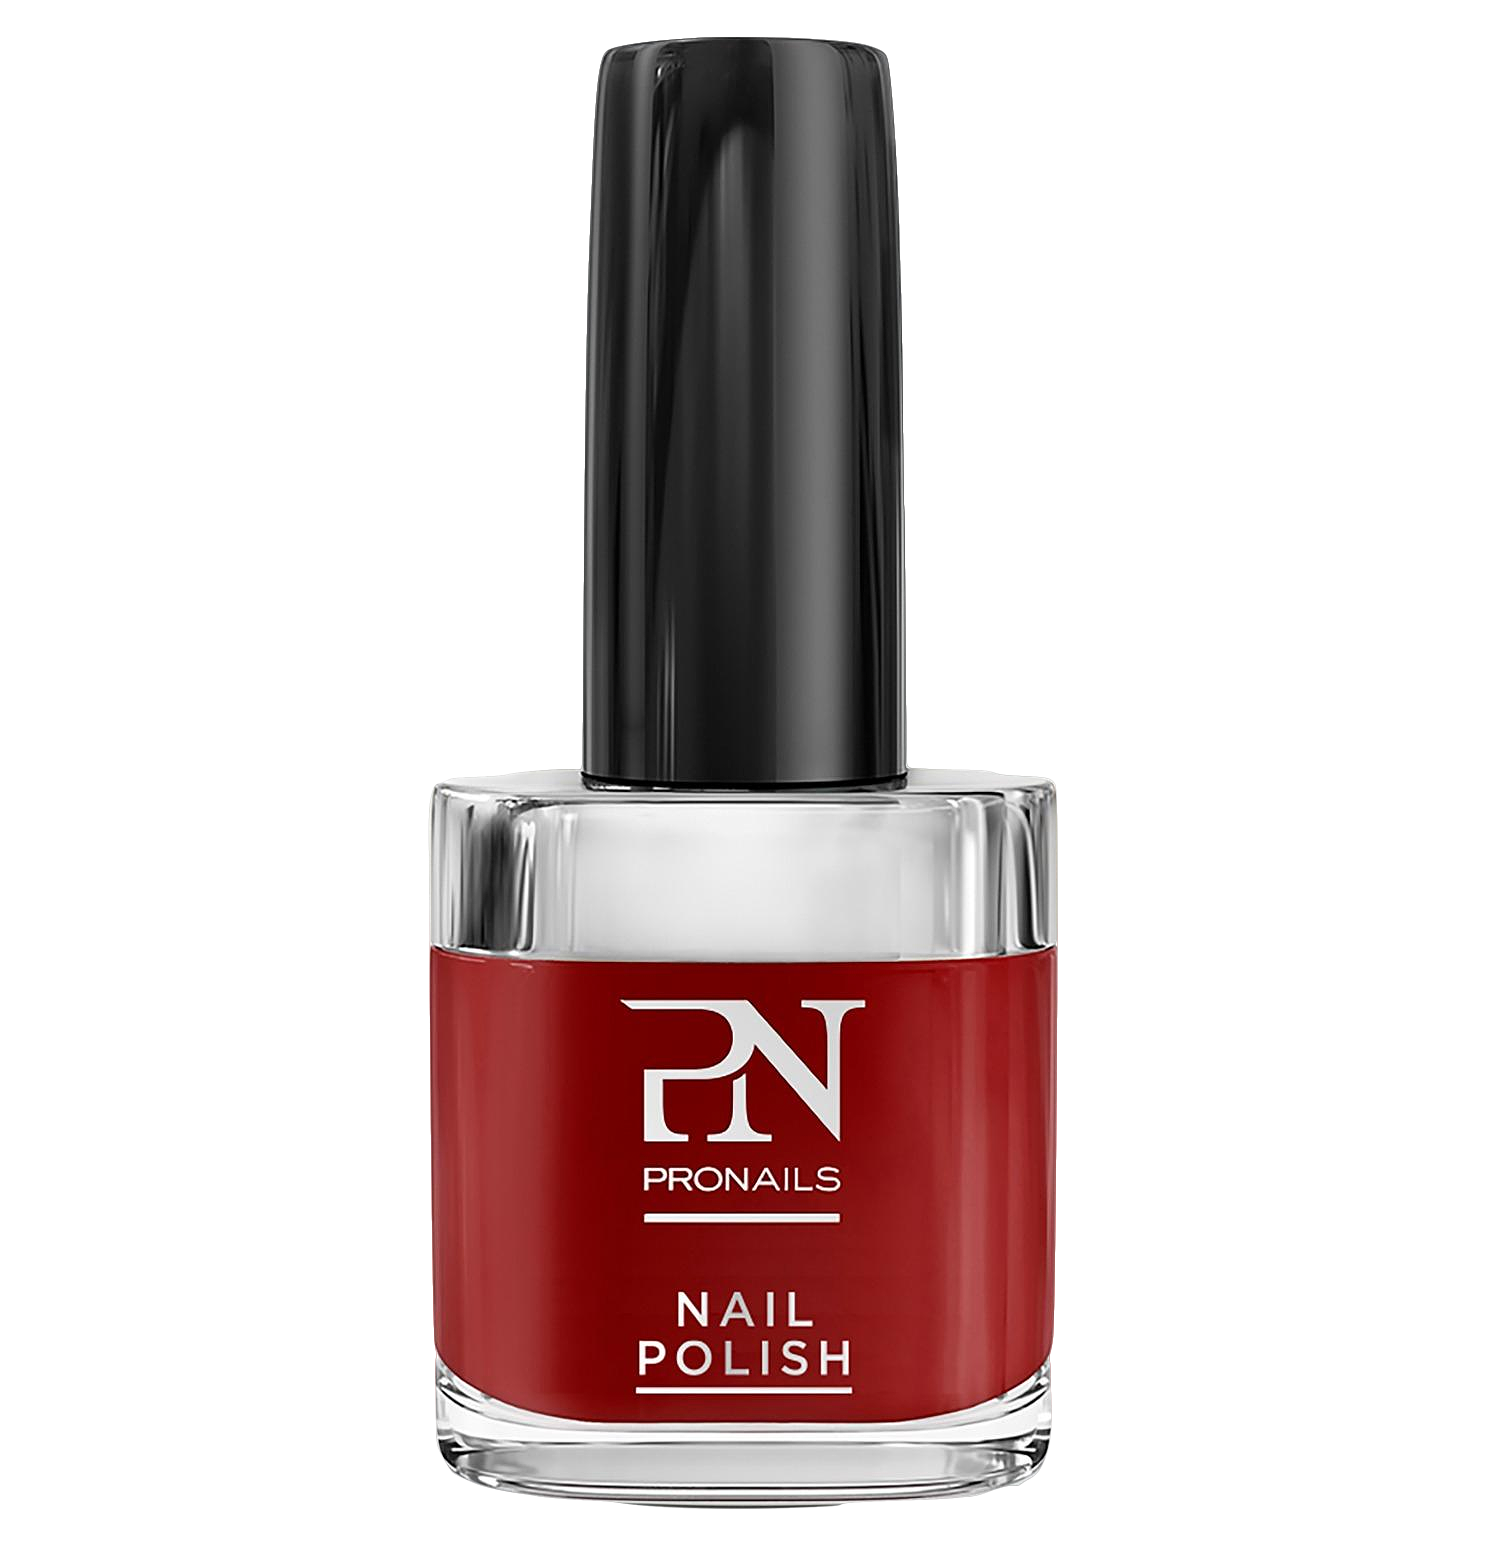 PN SELFCARE - Red nail polish 10ml - Vegan Cruelty Free